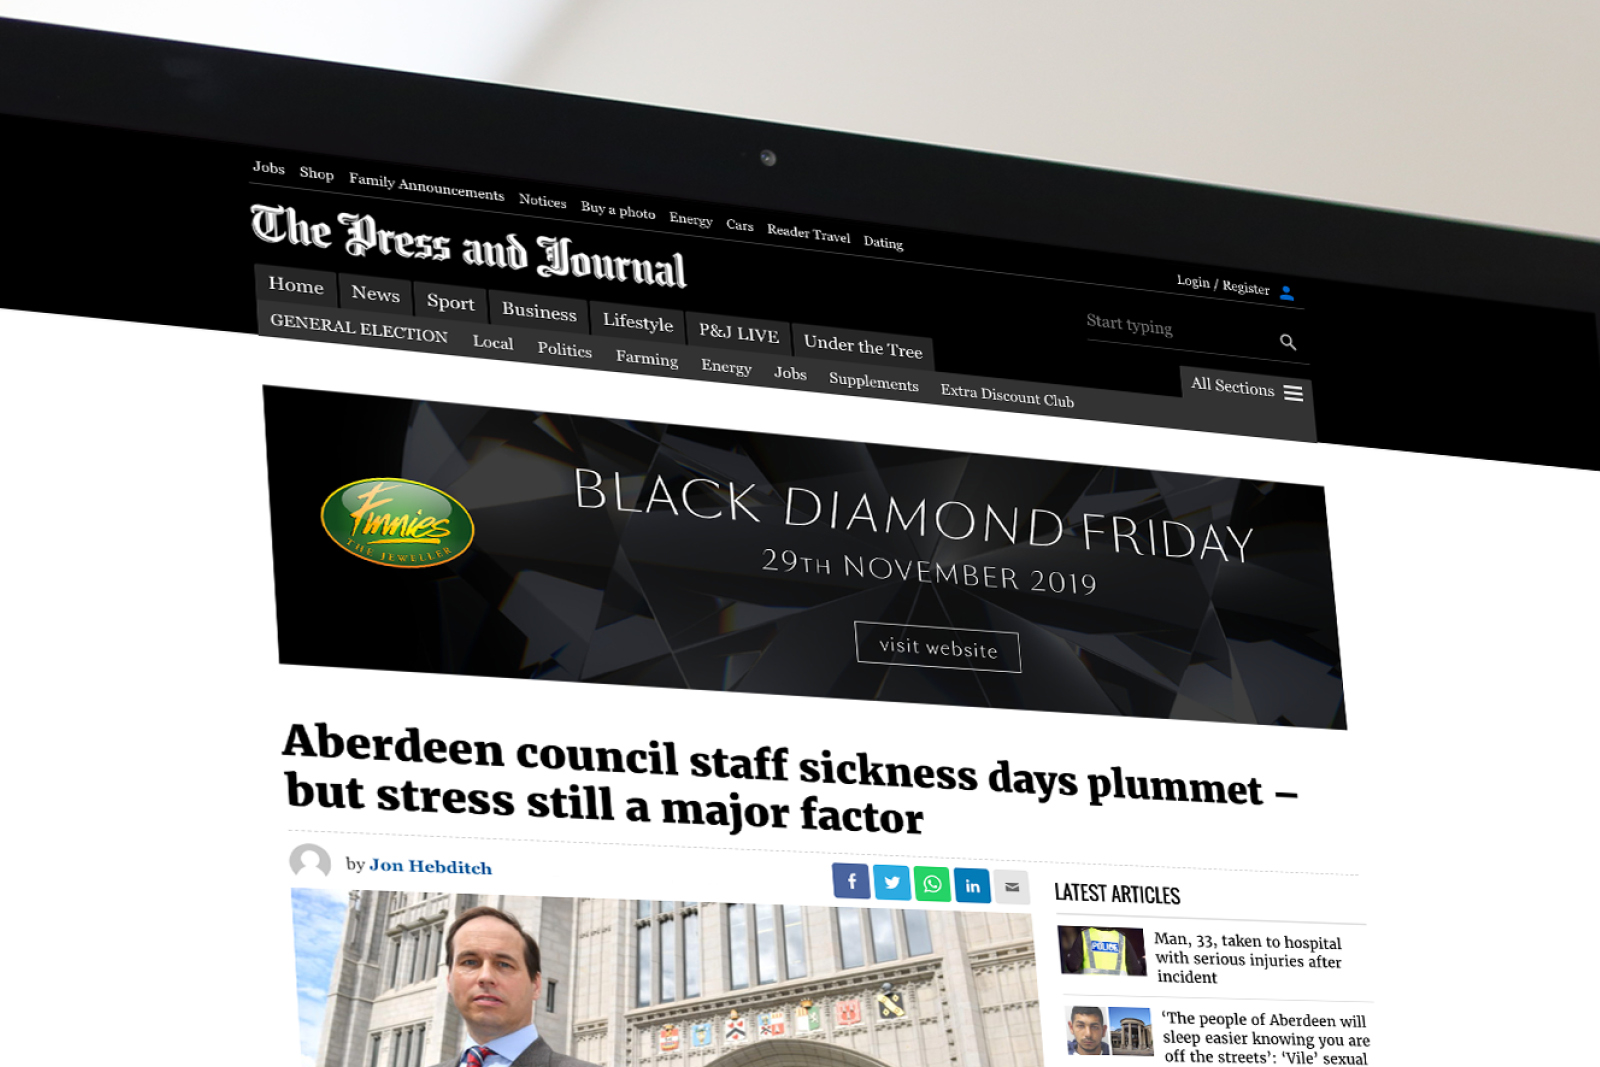  PORTFOLIO 'Black Diamond Friday’ online marketing campaign for Finnies the Jewellers, Aberdeen